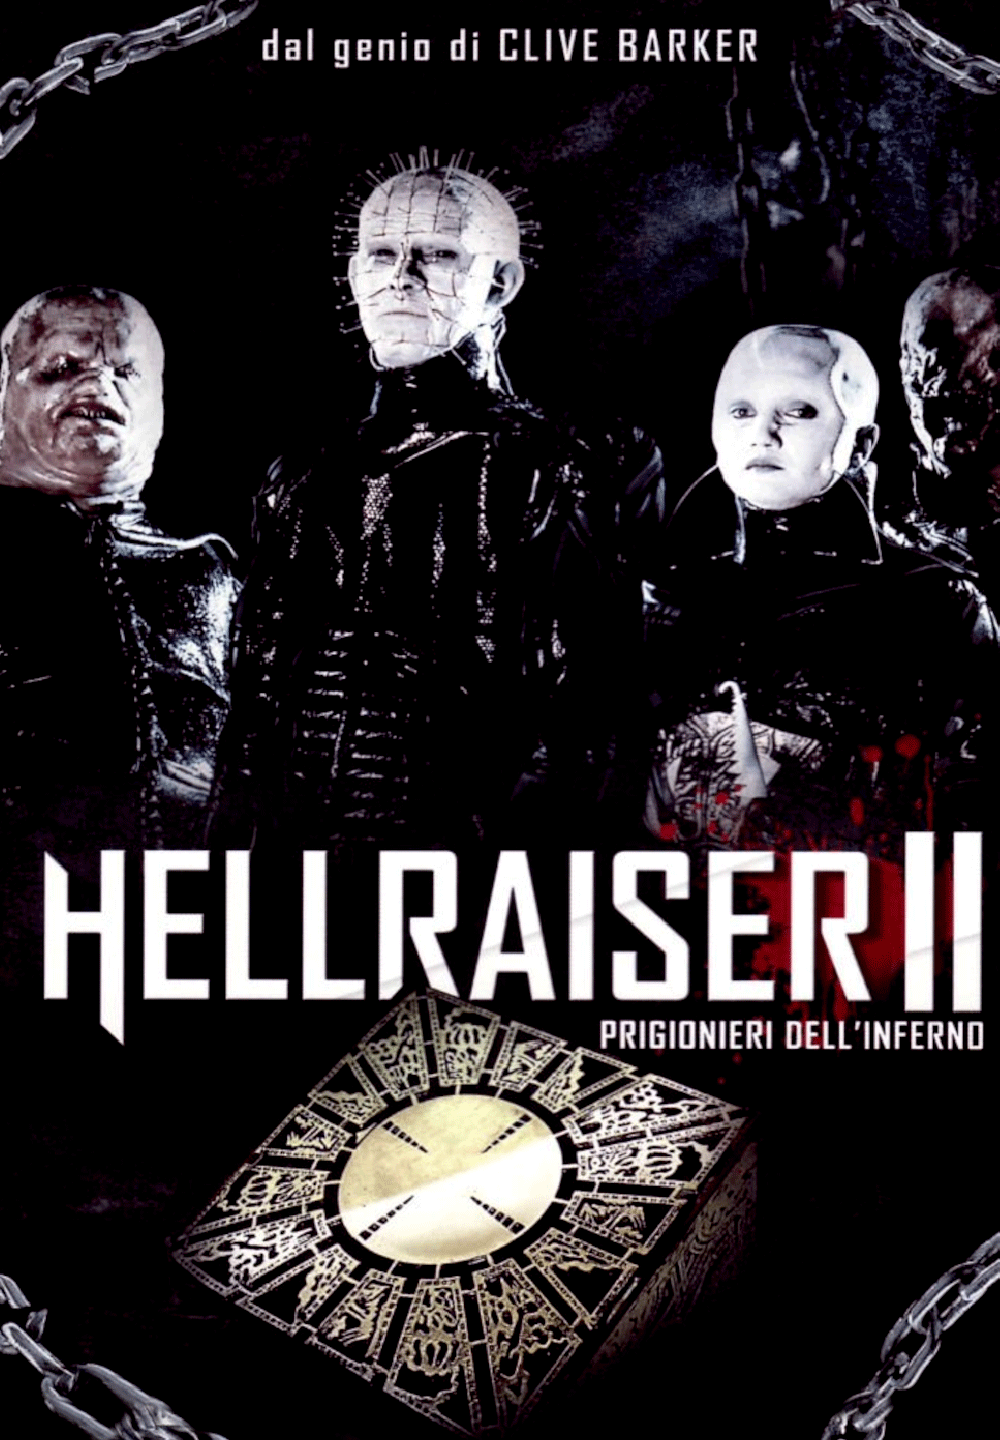 Hellraiser II – Prigionieri dell’inferno [HD] (1988)